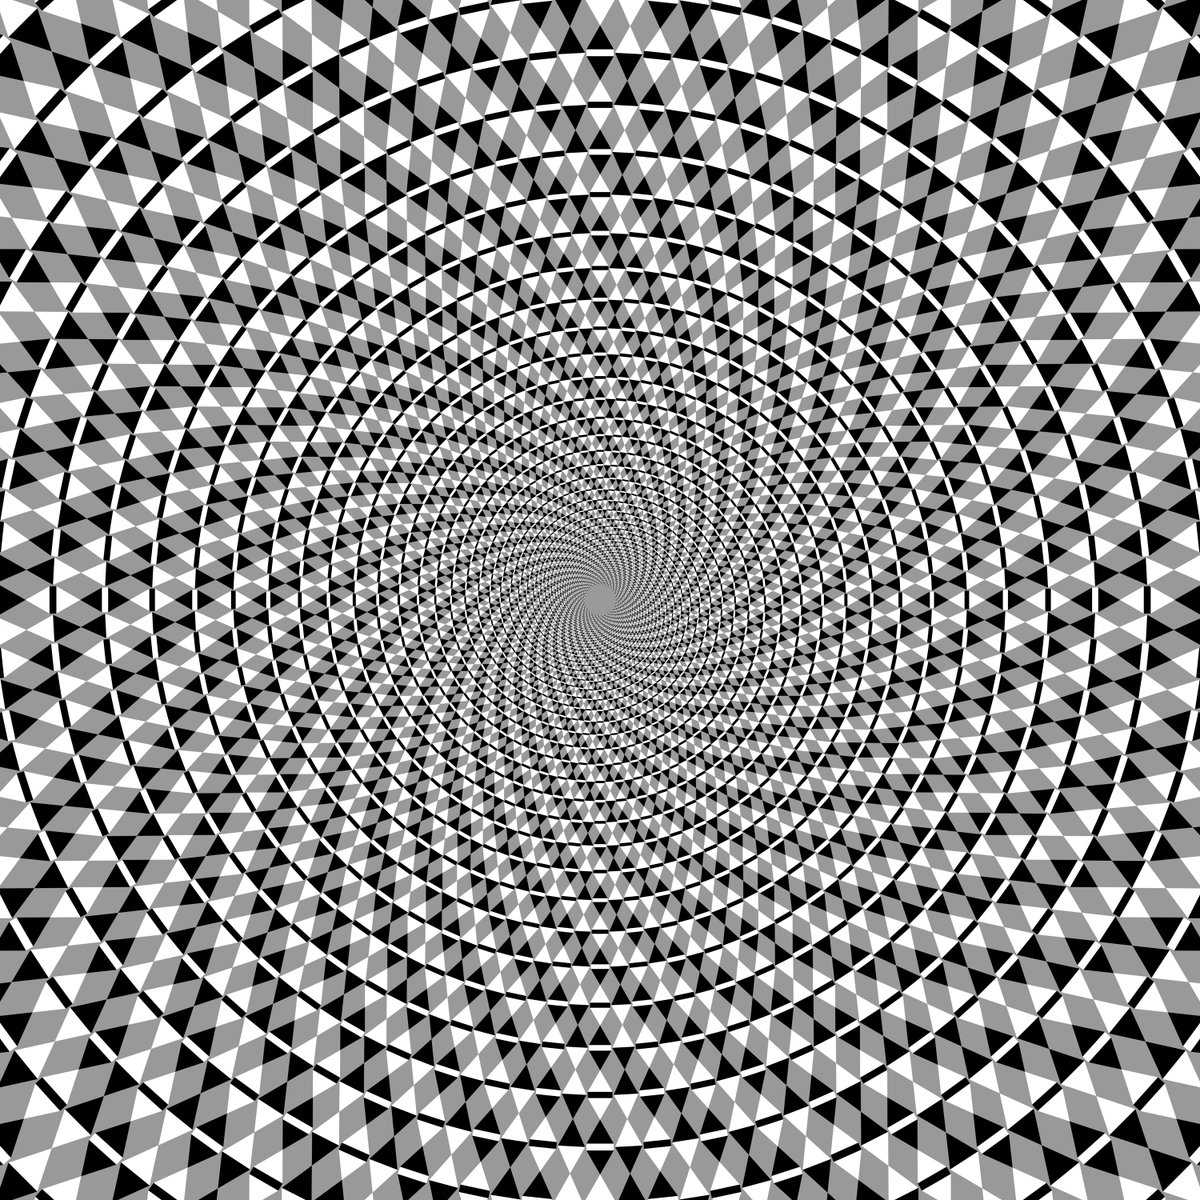 Иллюзия 9 букв. Фрейзер спираль иллюзия. Akiyoshi Kitaoka. Зрительная иллюзия спираль фрезера. Оптическая иллюзия спираль Фрейзера.